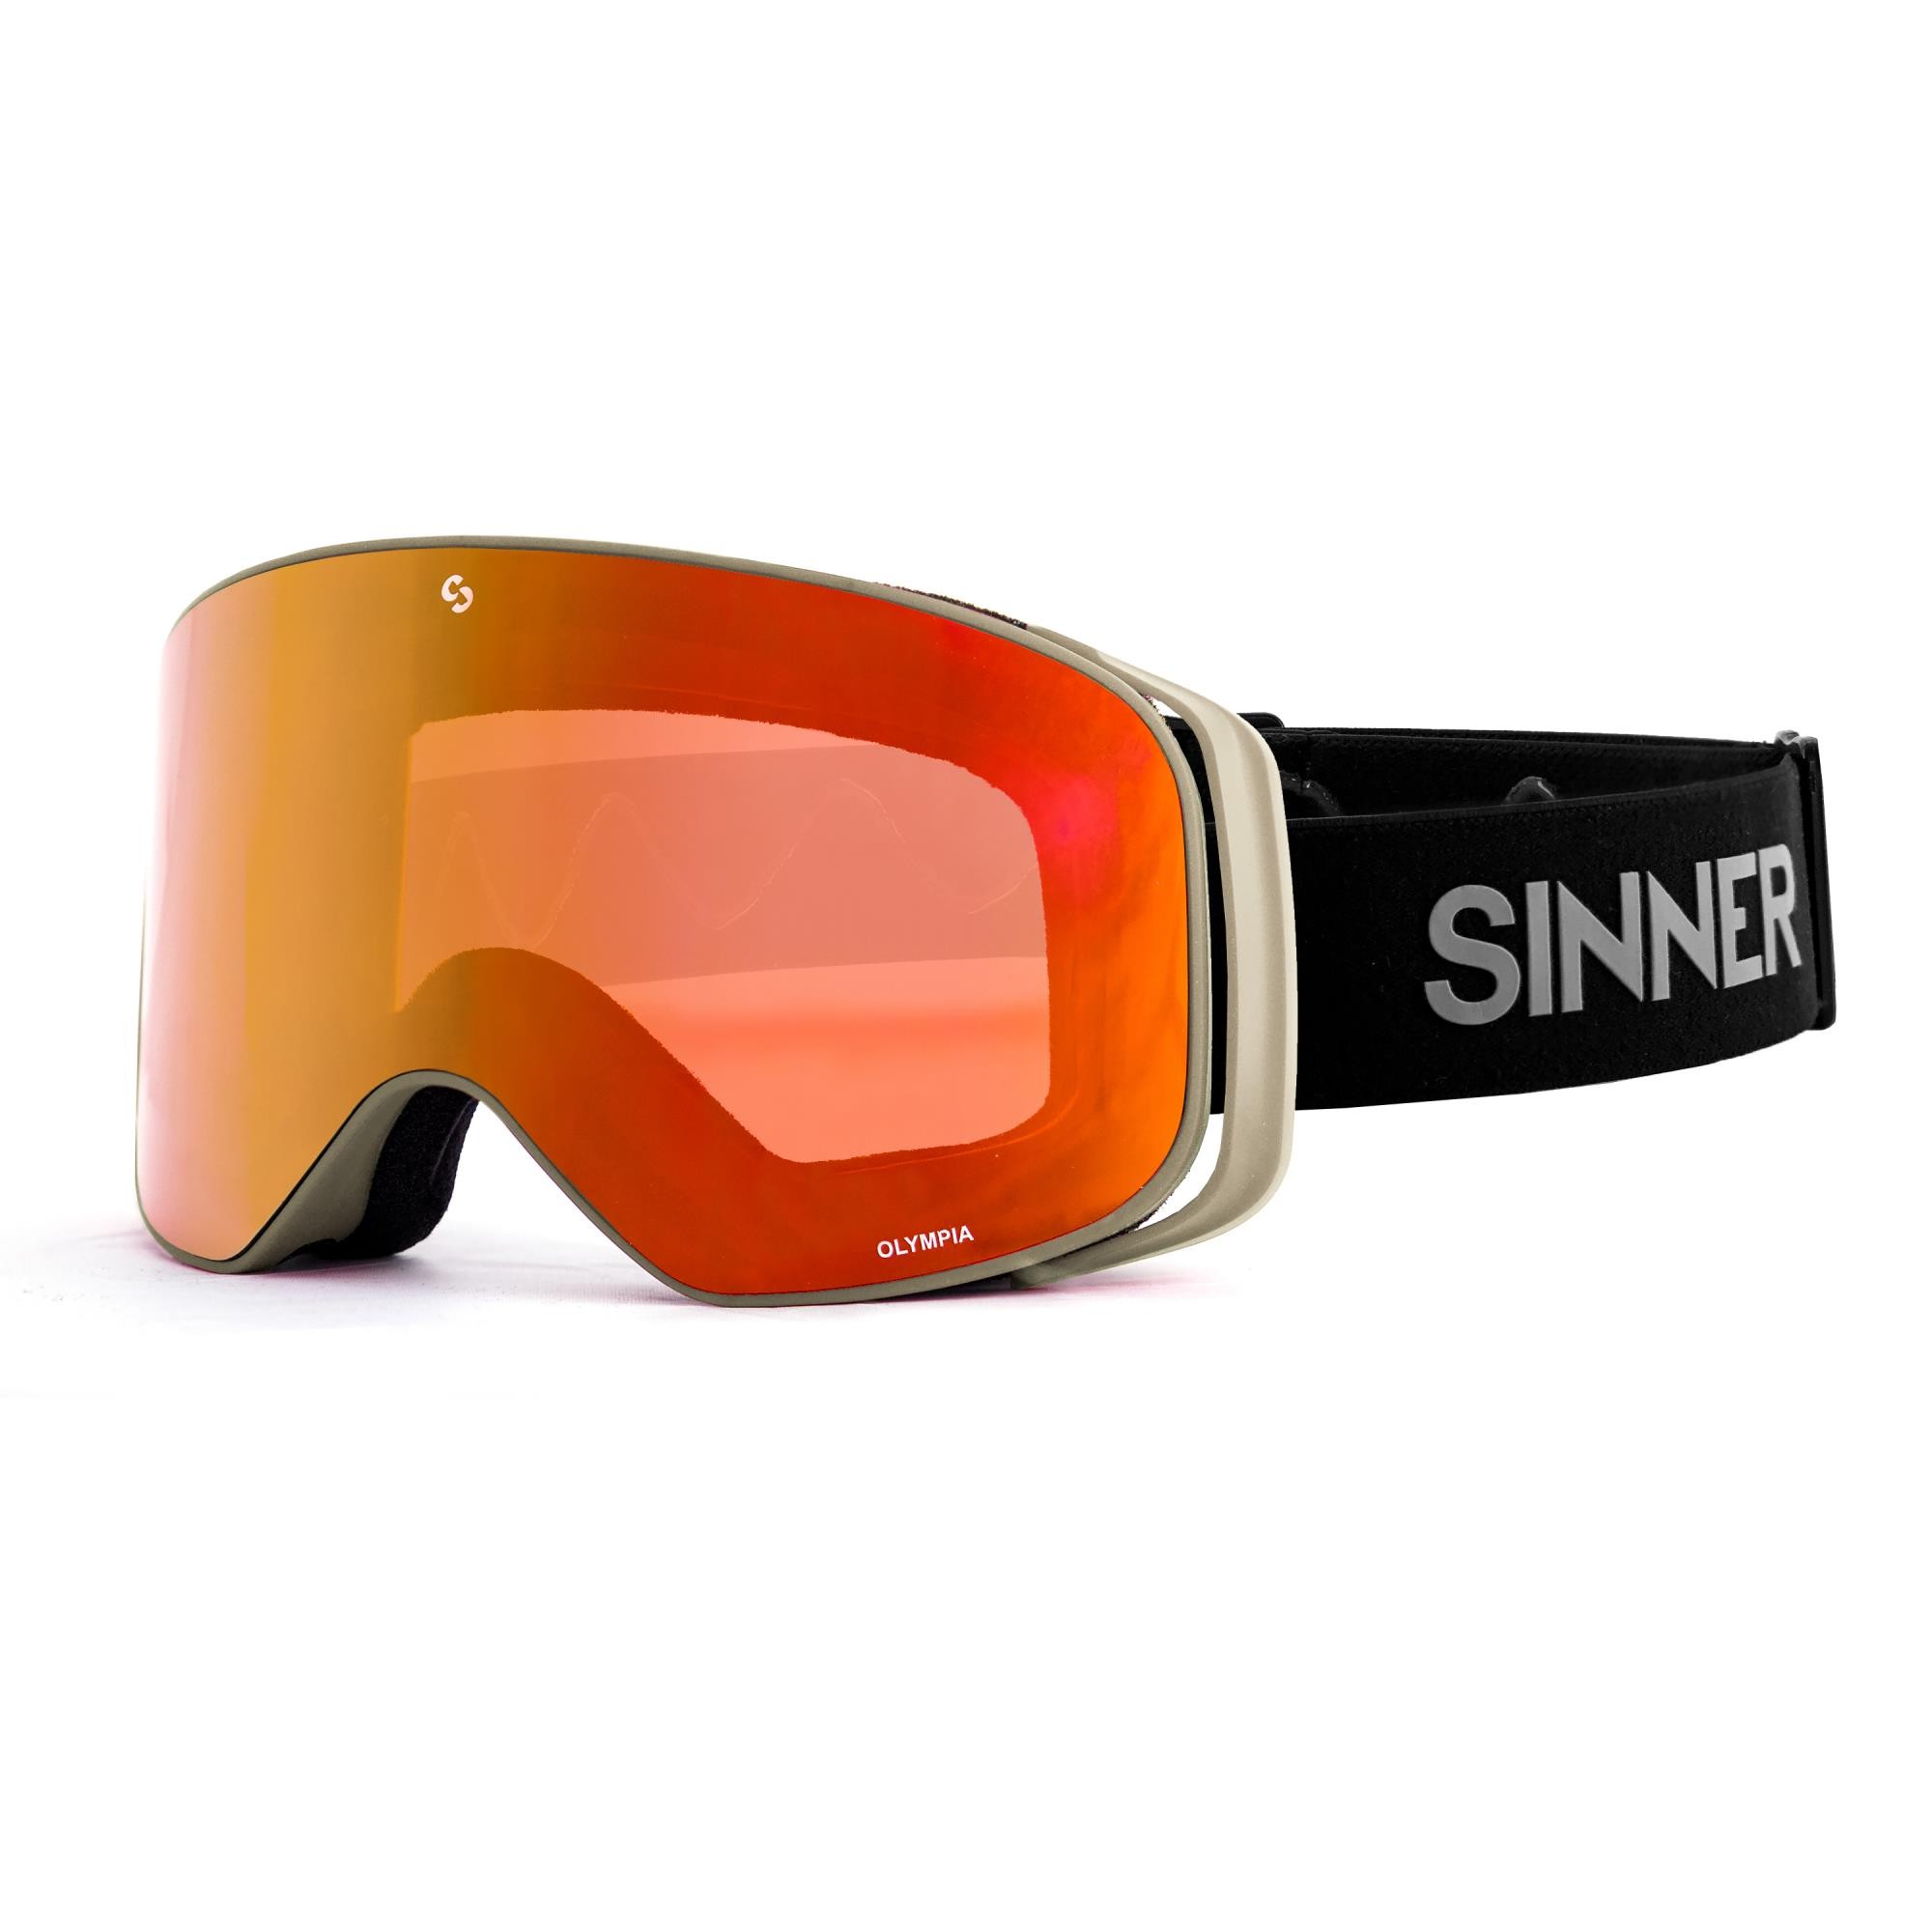 Sinner Olympia skibril - Mat Lichtgrijs - Rode lens